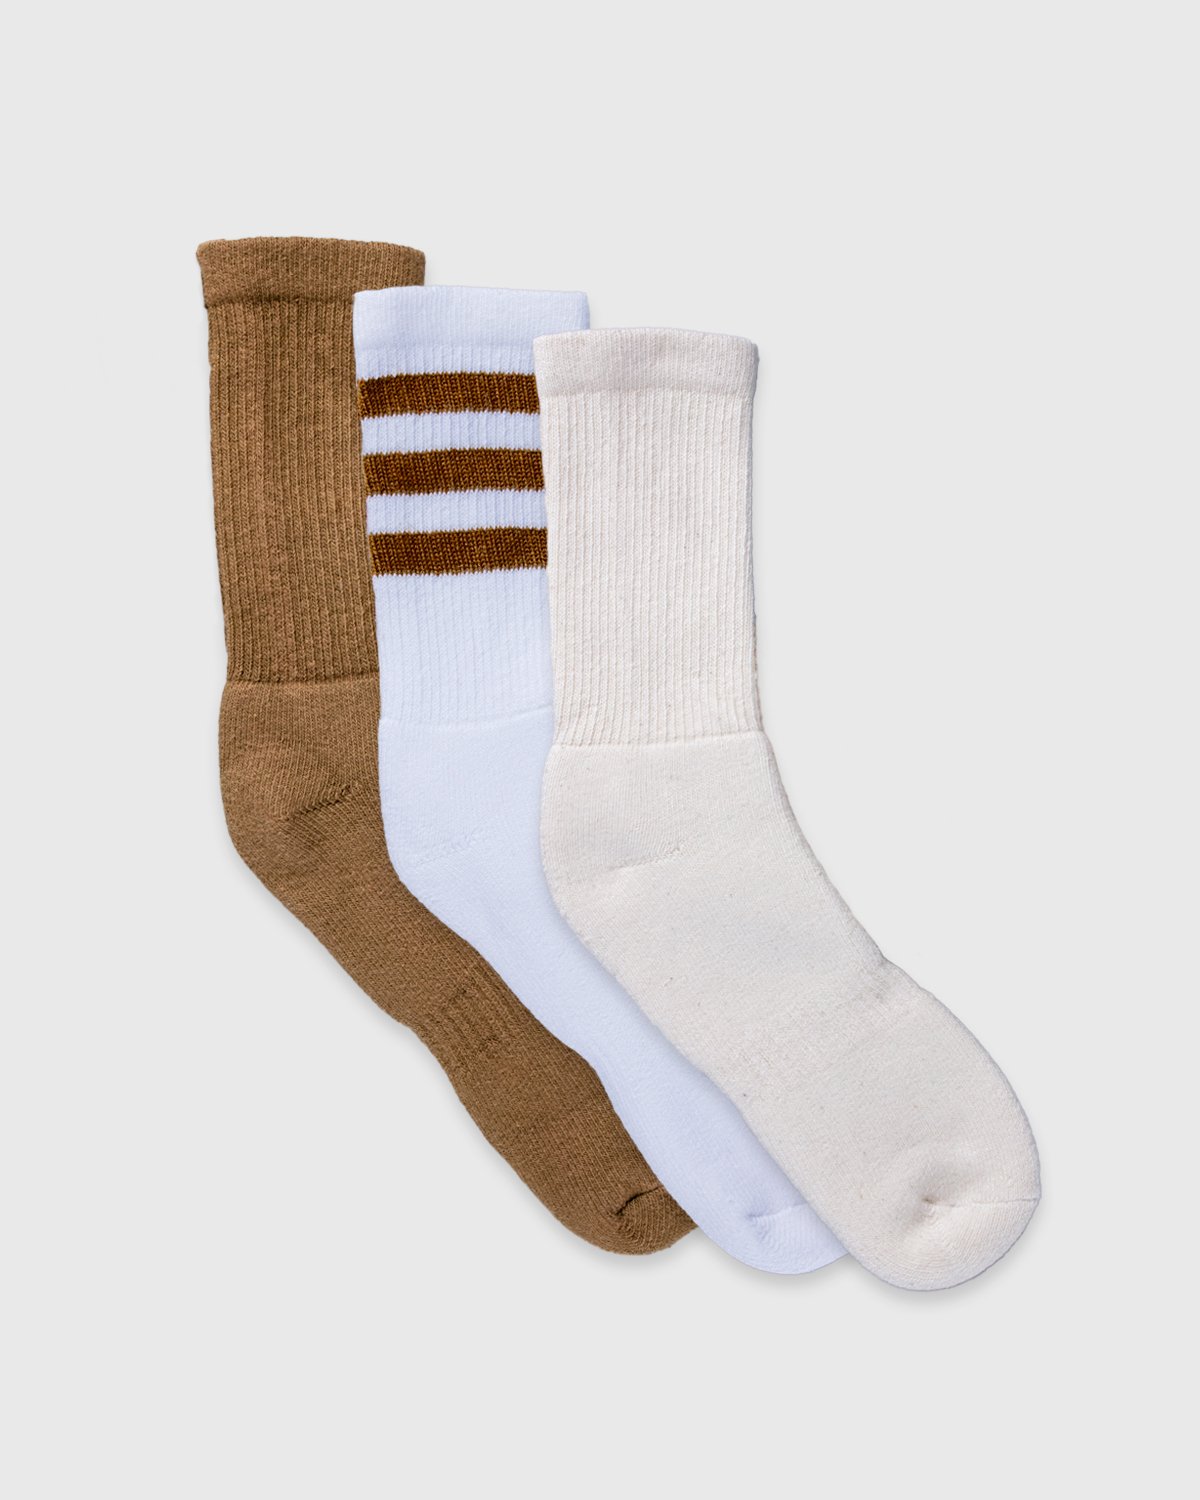 Darryl Brown - Sock Set Multicolour - Crew - Multi - Image 1